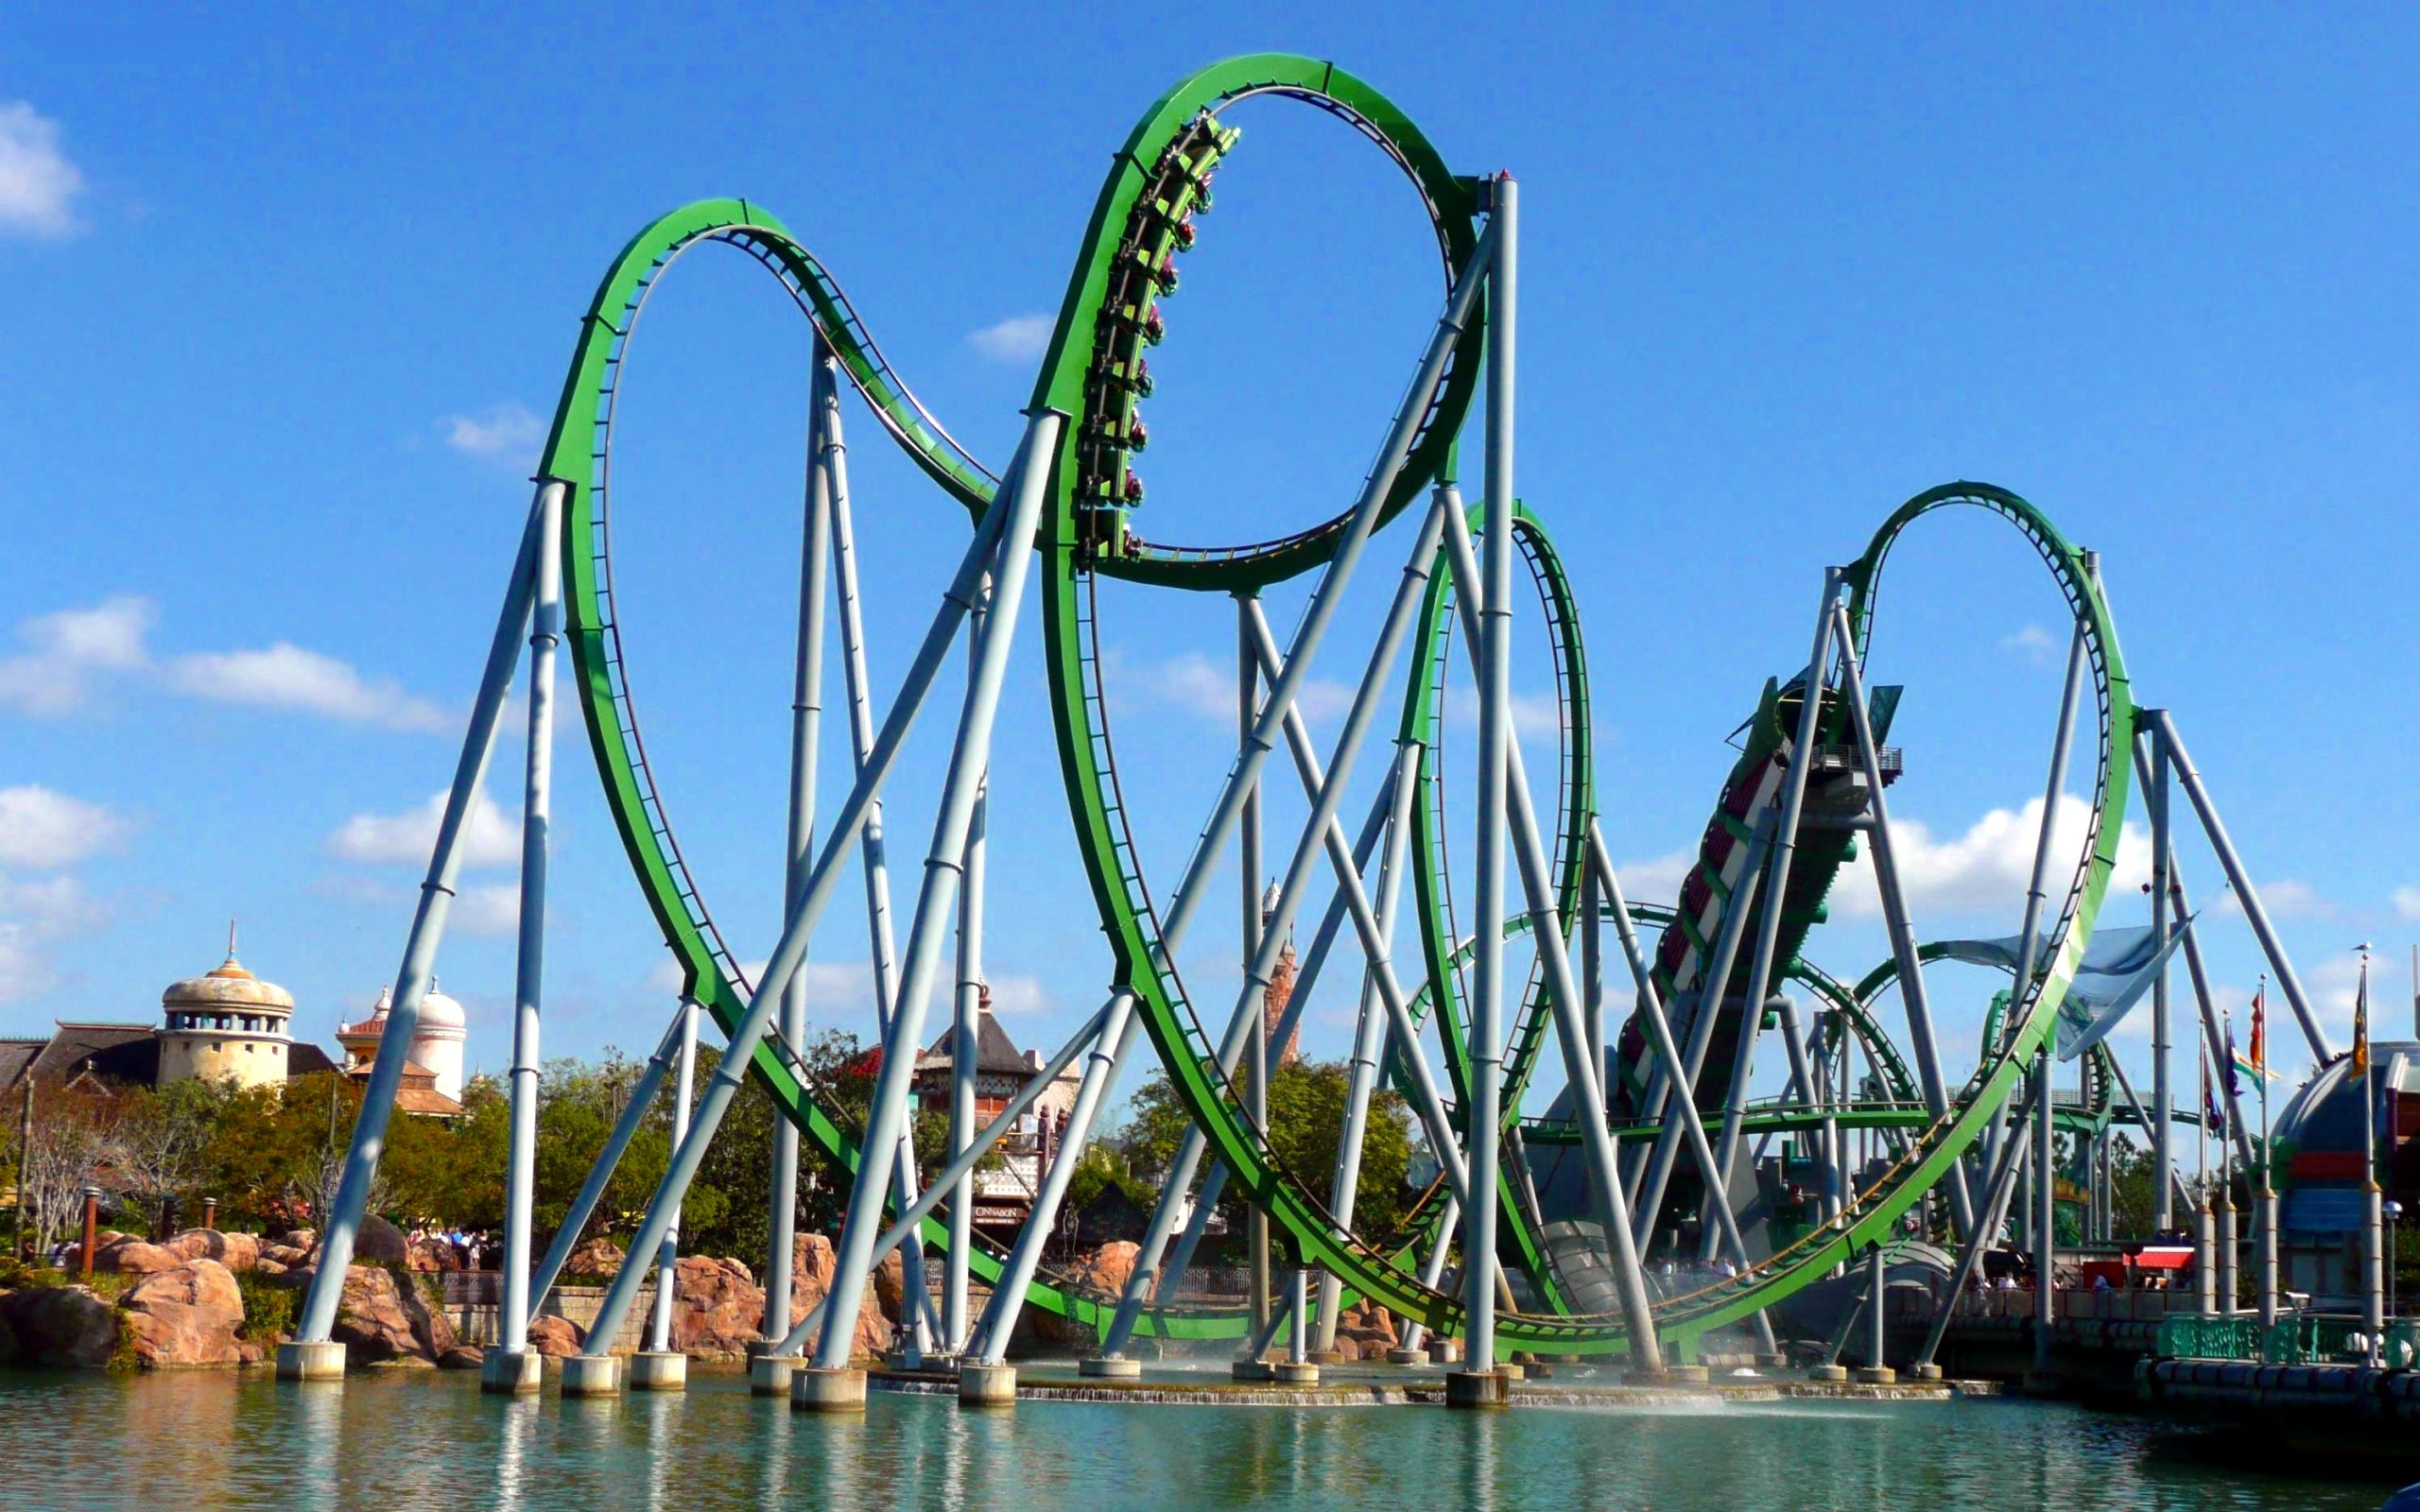 Hulk roller coaster at Universal's Islands of Adventure 